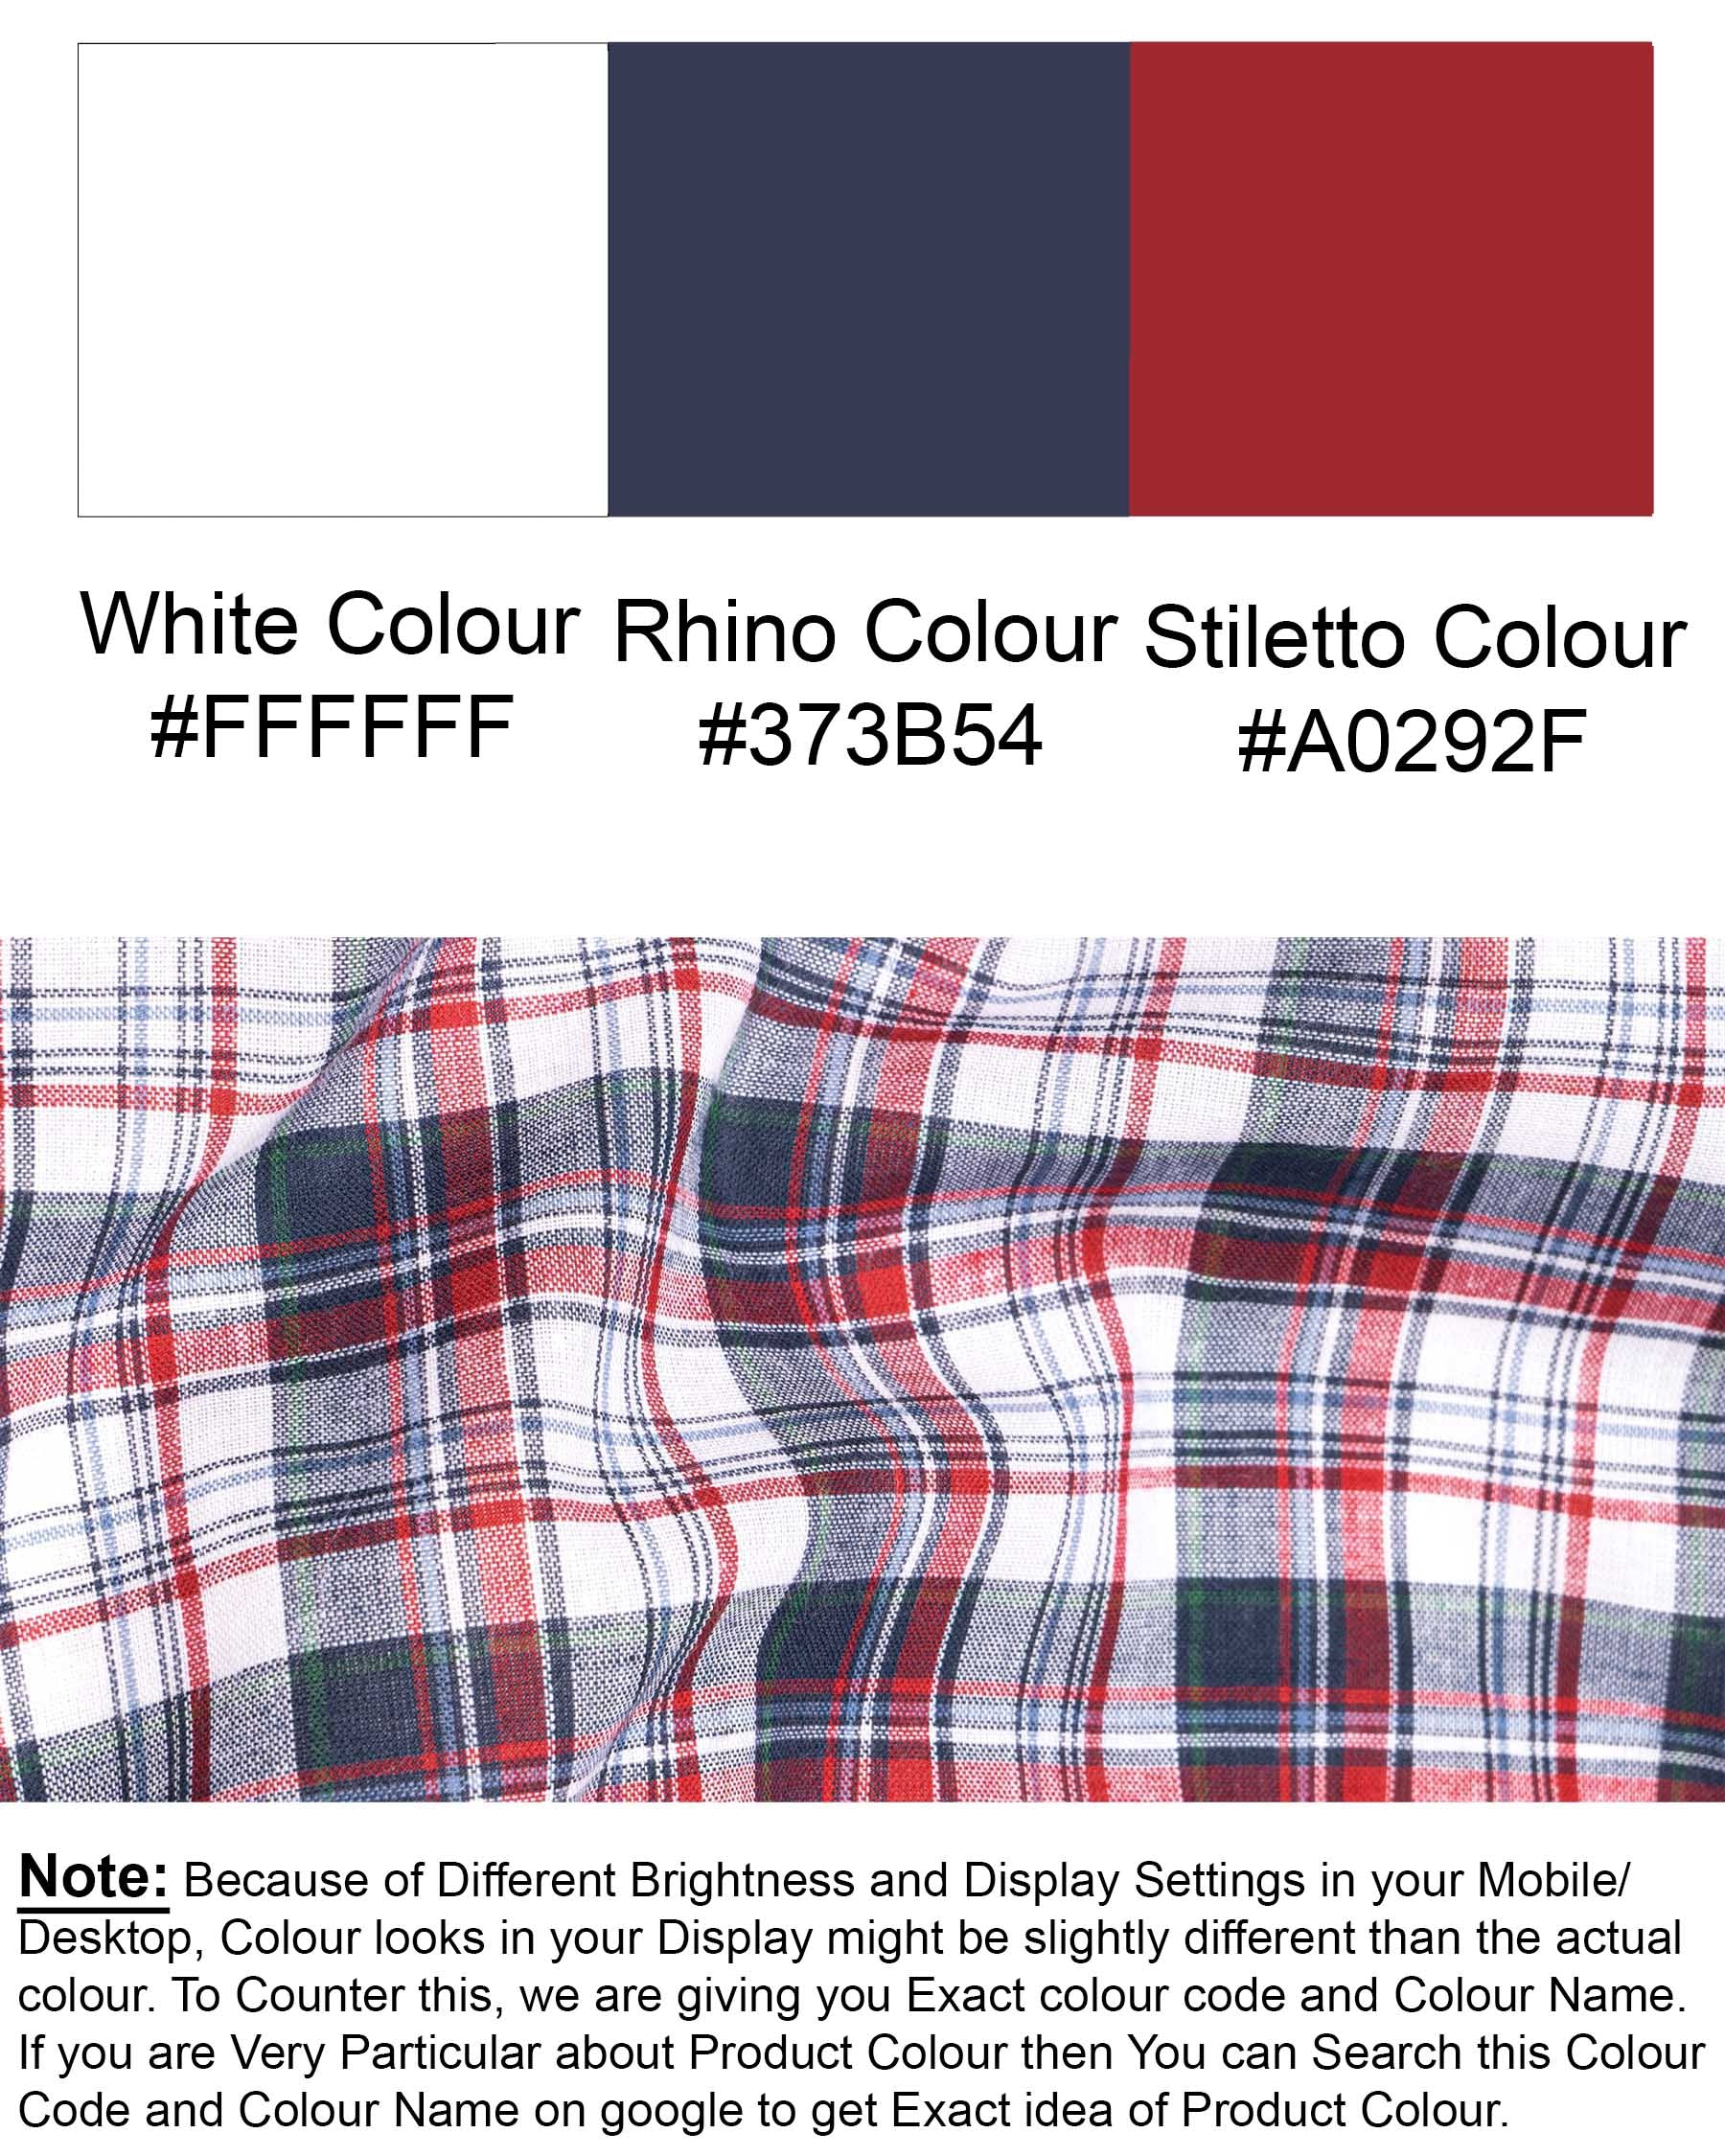 Rhino Blue with Stiletto Red Plaid Premium Cotton Shirt 7042-BD-BLE-38, 7042-BD-BLE-H-38, 7042-BD-BLE-39, 7042-BD-BLE-H-39, 7042-BD-BLE-40, 7042-BD-BLE-H-40, 7042-BD-BLE-42, 7042-BD-BLE-H-42, 7042-BD-BLE-44, 7042-BD-BLE-H-44, 7042-BD-BLE-46, 7042-BD-BLE-H-46, 7042-BD-BLE-48, 7042-BD-BLE-H-48, 7042-BD-BLE-50, 7042-BD-BLE-H-50, 7042-BD-BLE-52, 7042-BD-BLE-H-52